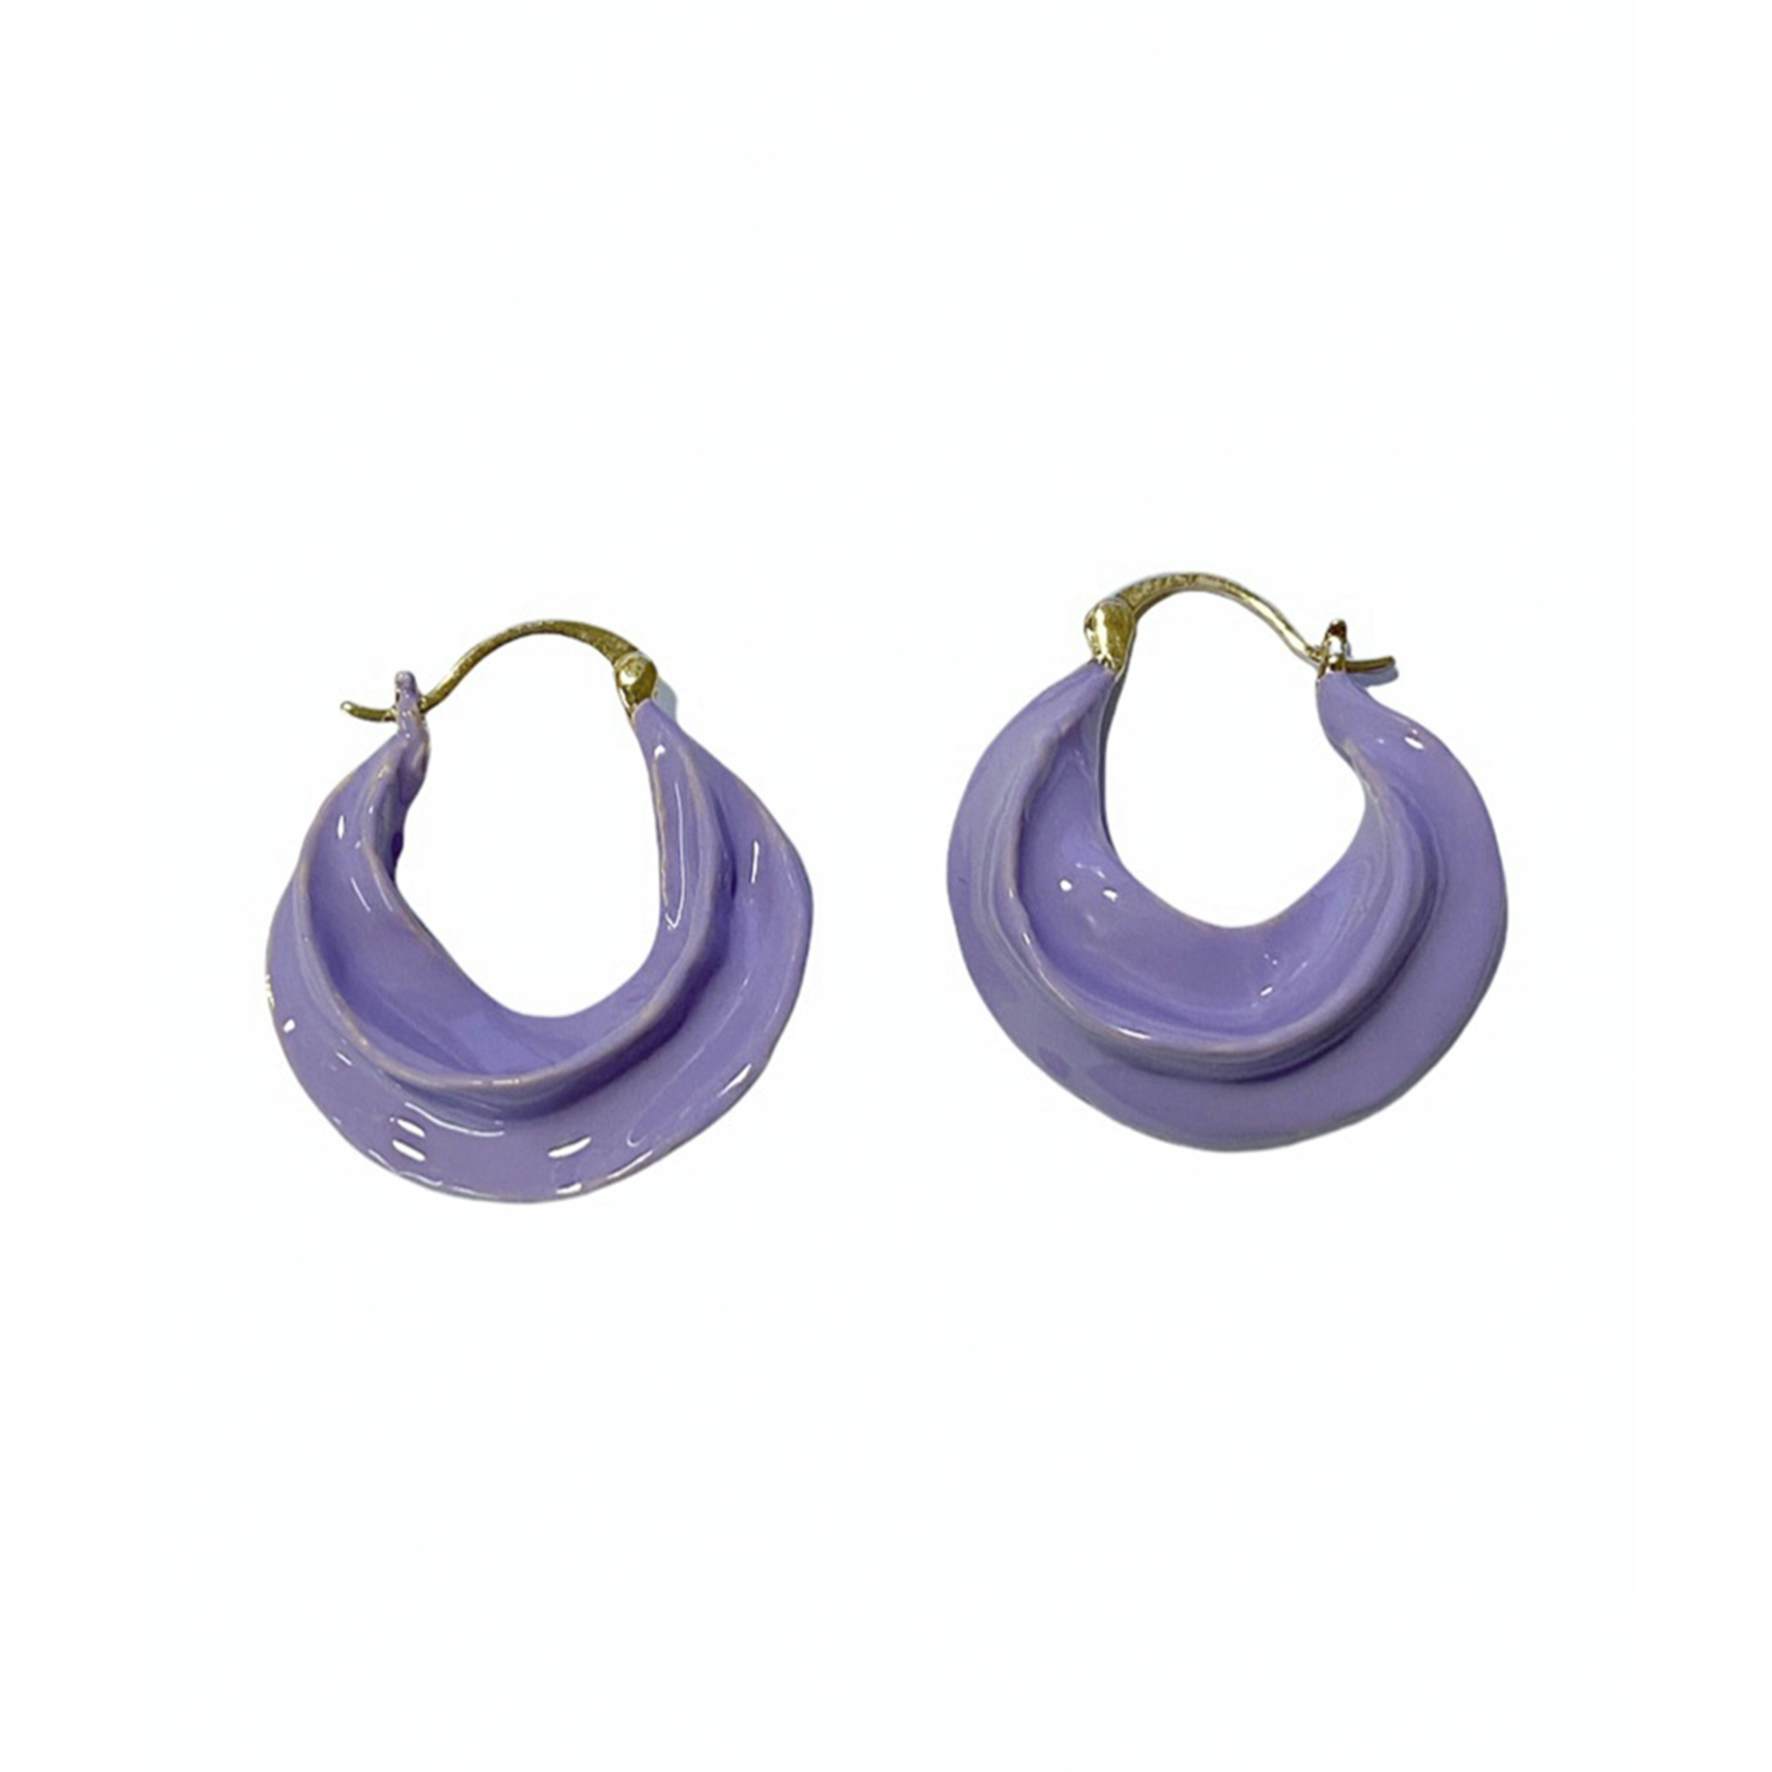 Africa Enamel Earrings Lavender from Pico in Goldplated-Silver Sterling 925